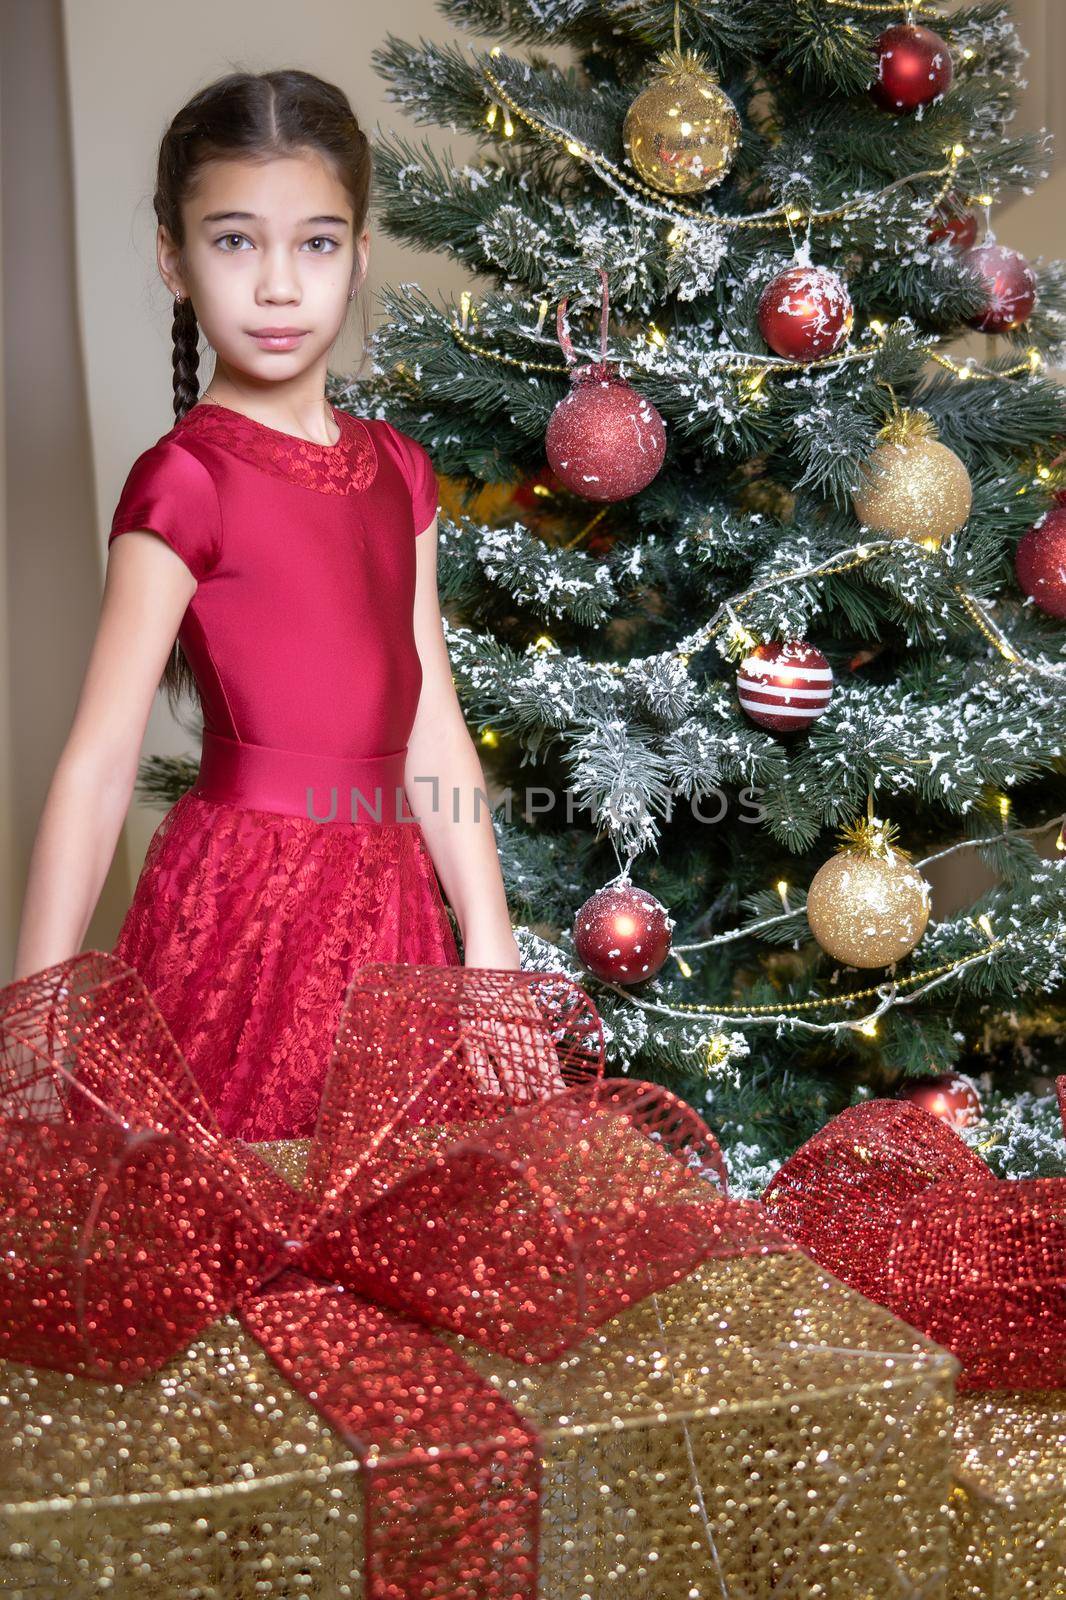 The girl at the Christmas tree. by kolesnikov_studio